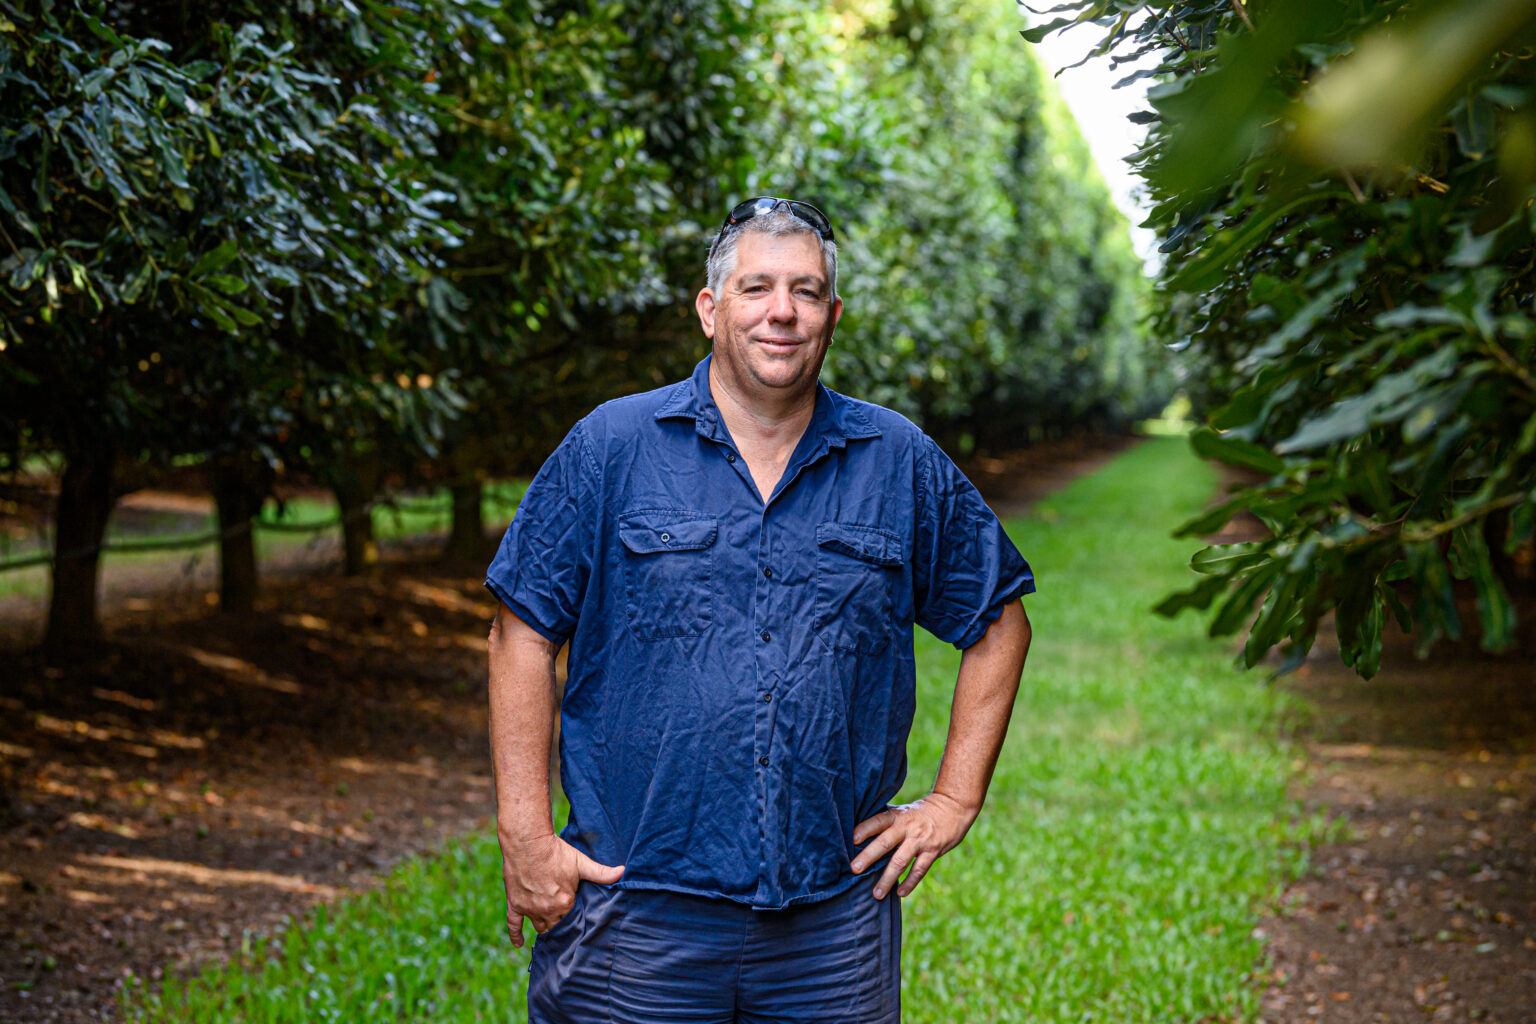 Macadamia grower Anthony Sinnott